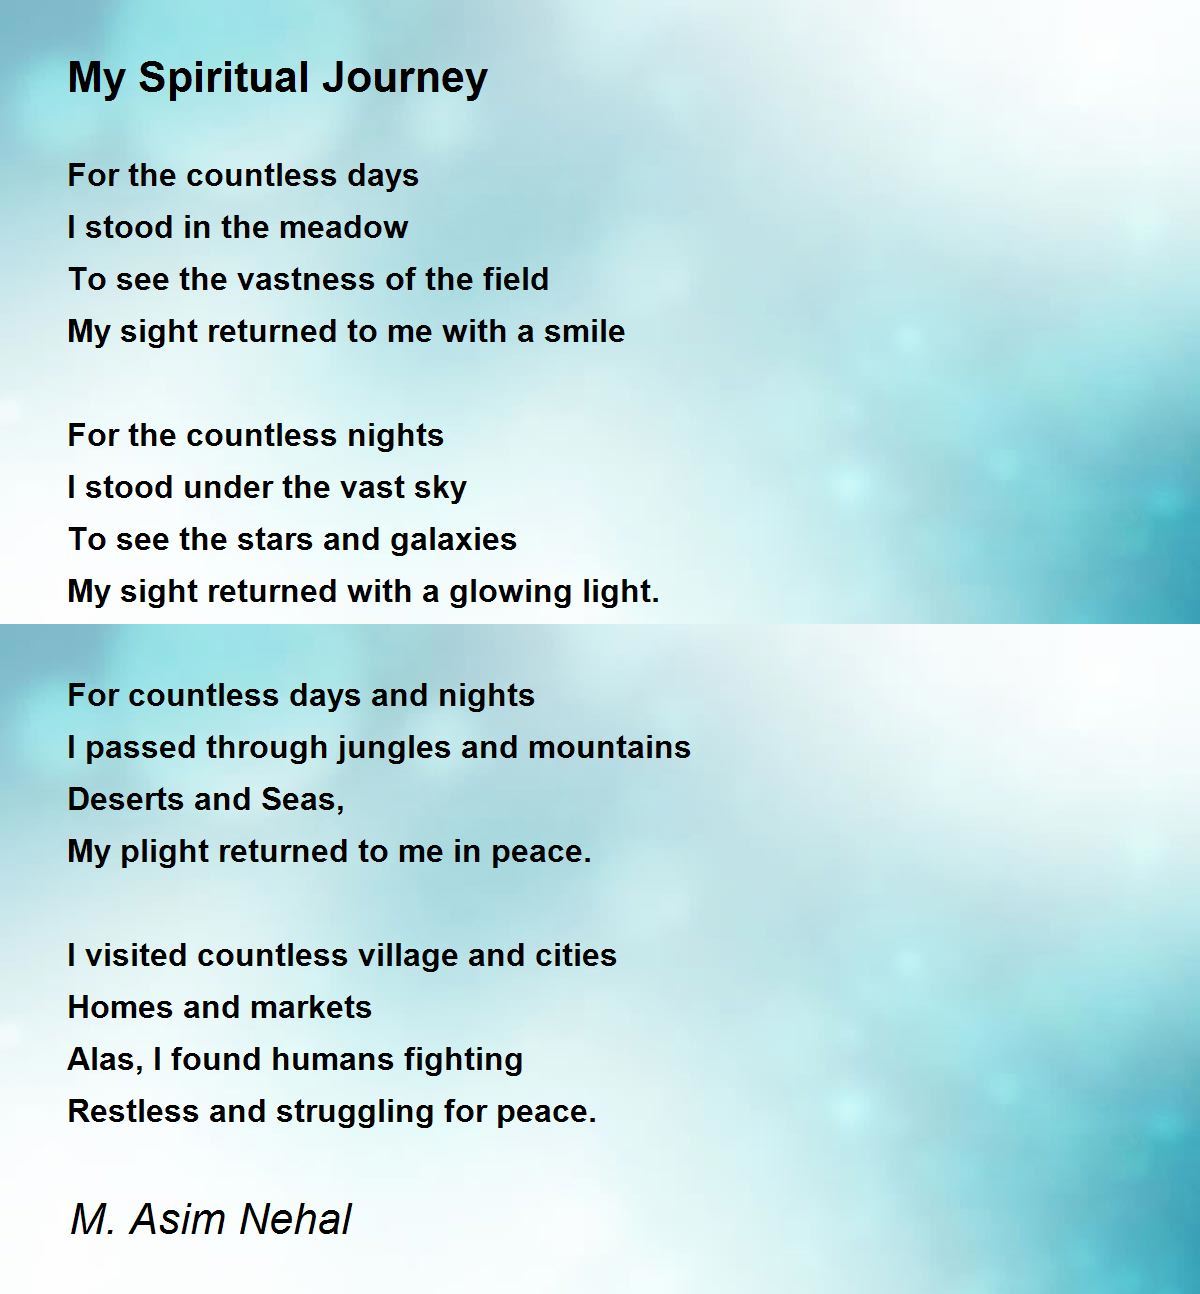 My Spiritual Journey - My Spiritual Journey Poem by M. Asim Nehal